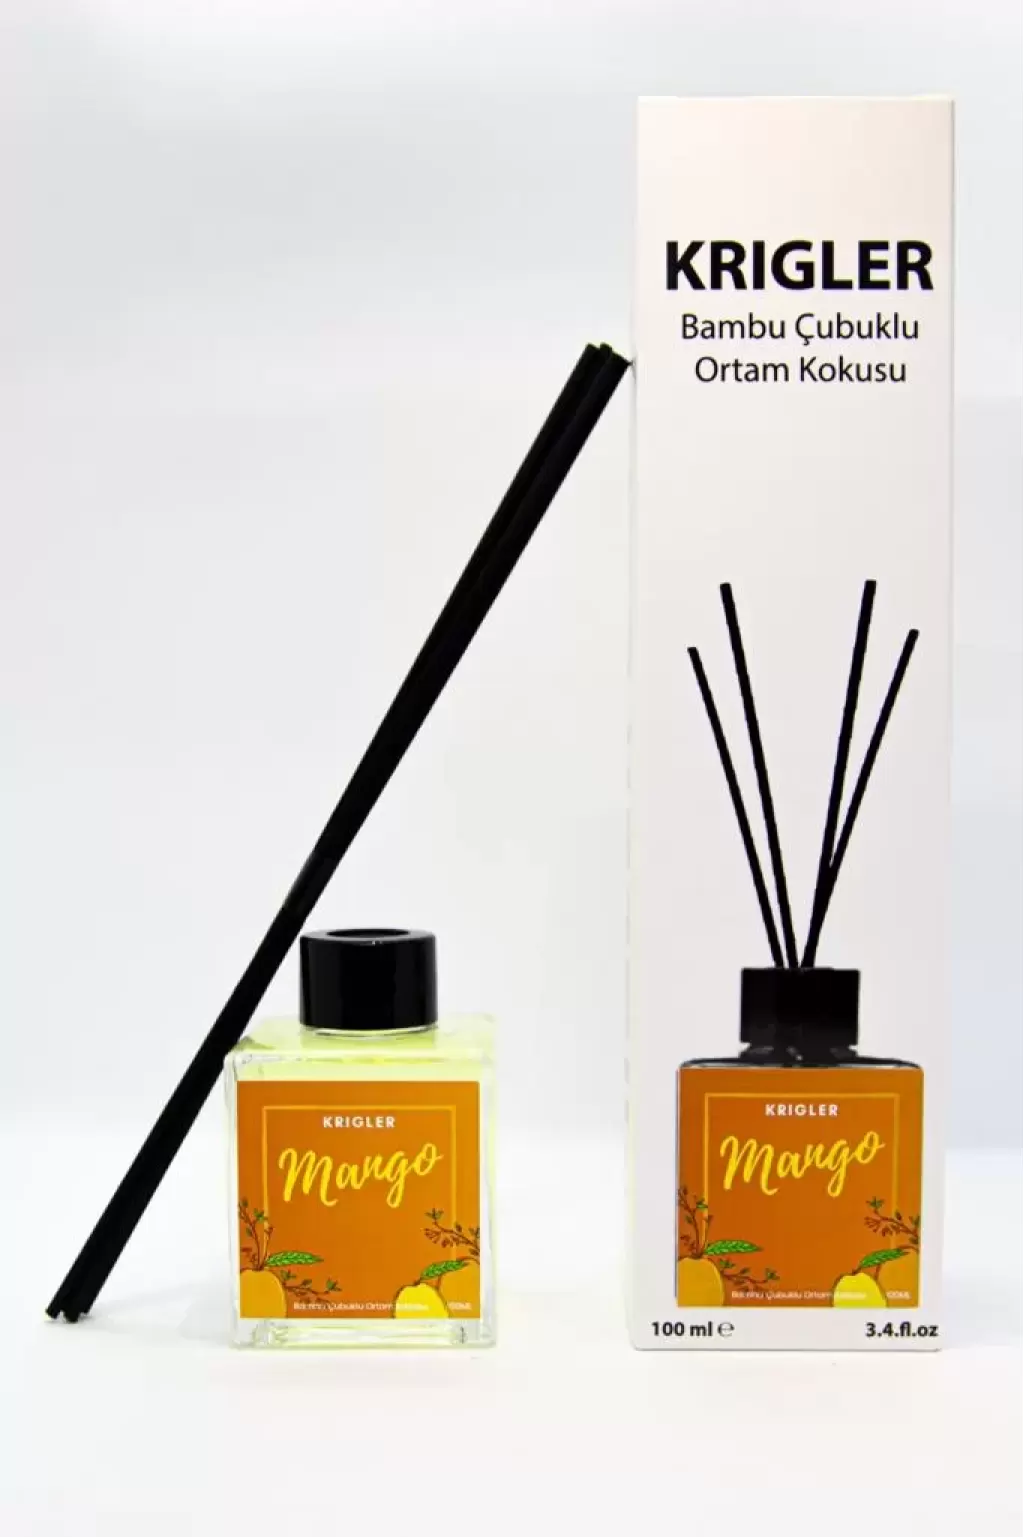 Krigler - Krigler Bambu Çubuklu Oda Kokusu Sümbül Mango 100 ml